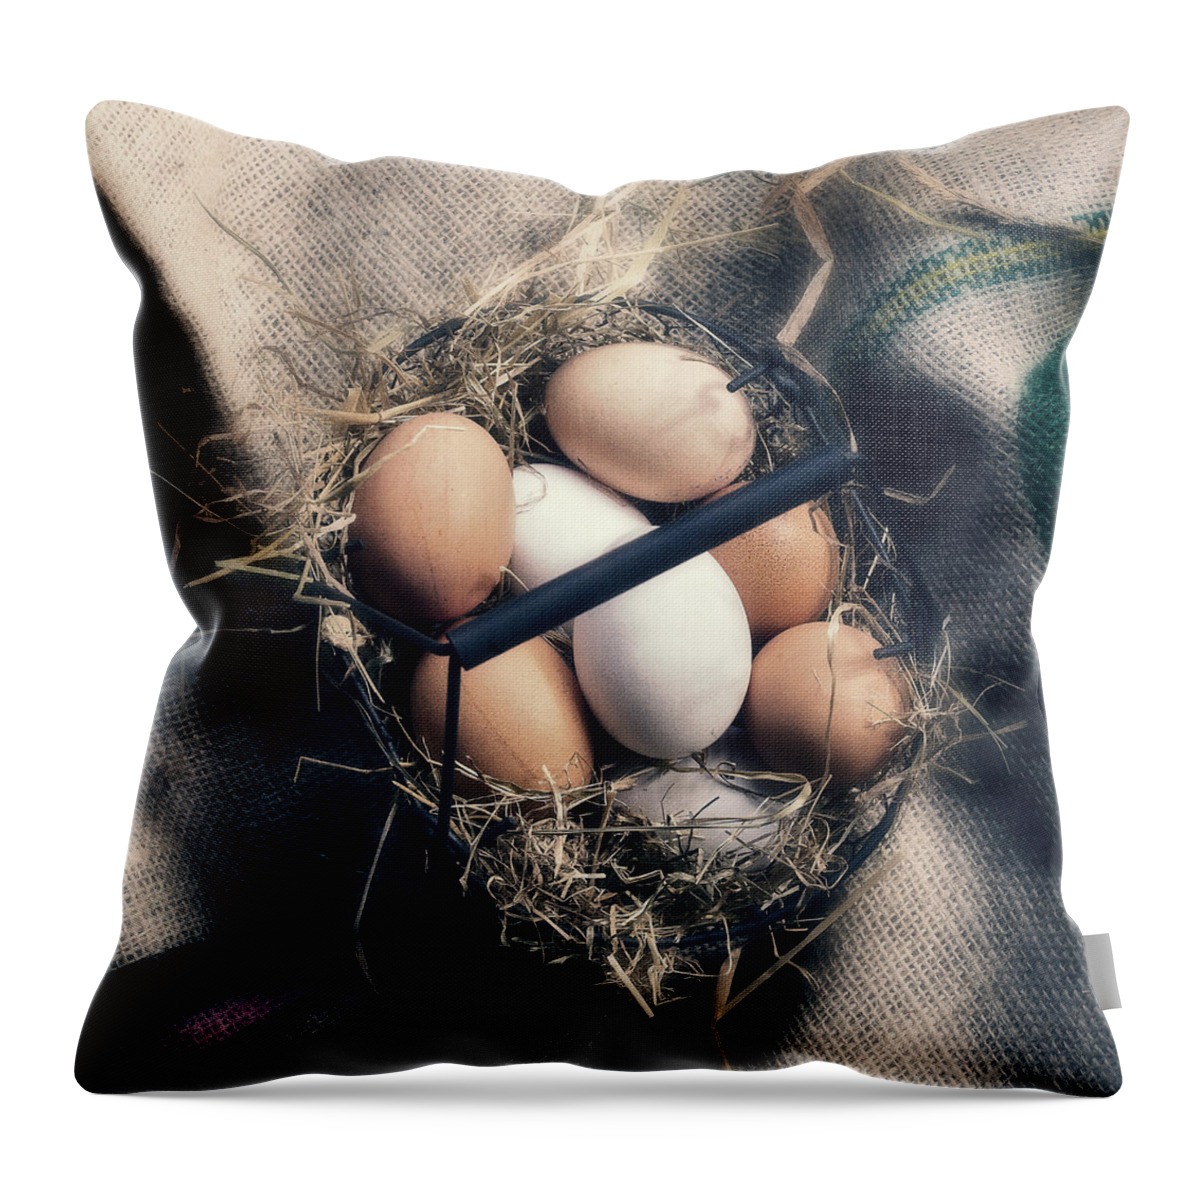 Eggs Throw Pillow featuring the photograph Eggs #1 by Joana Kruse